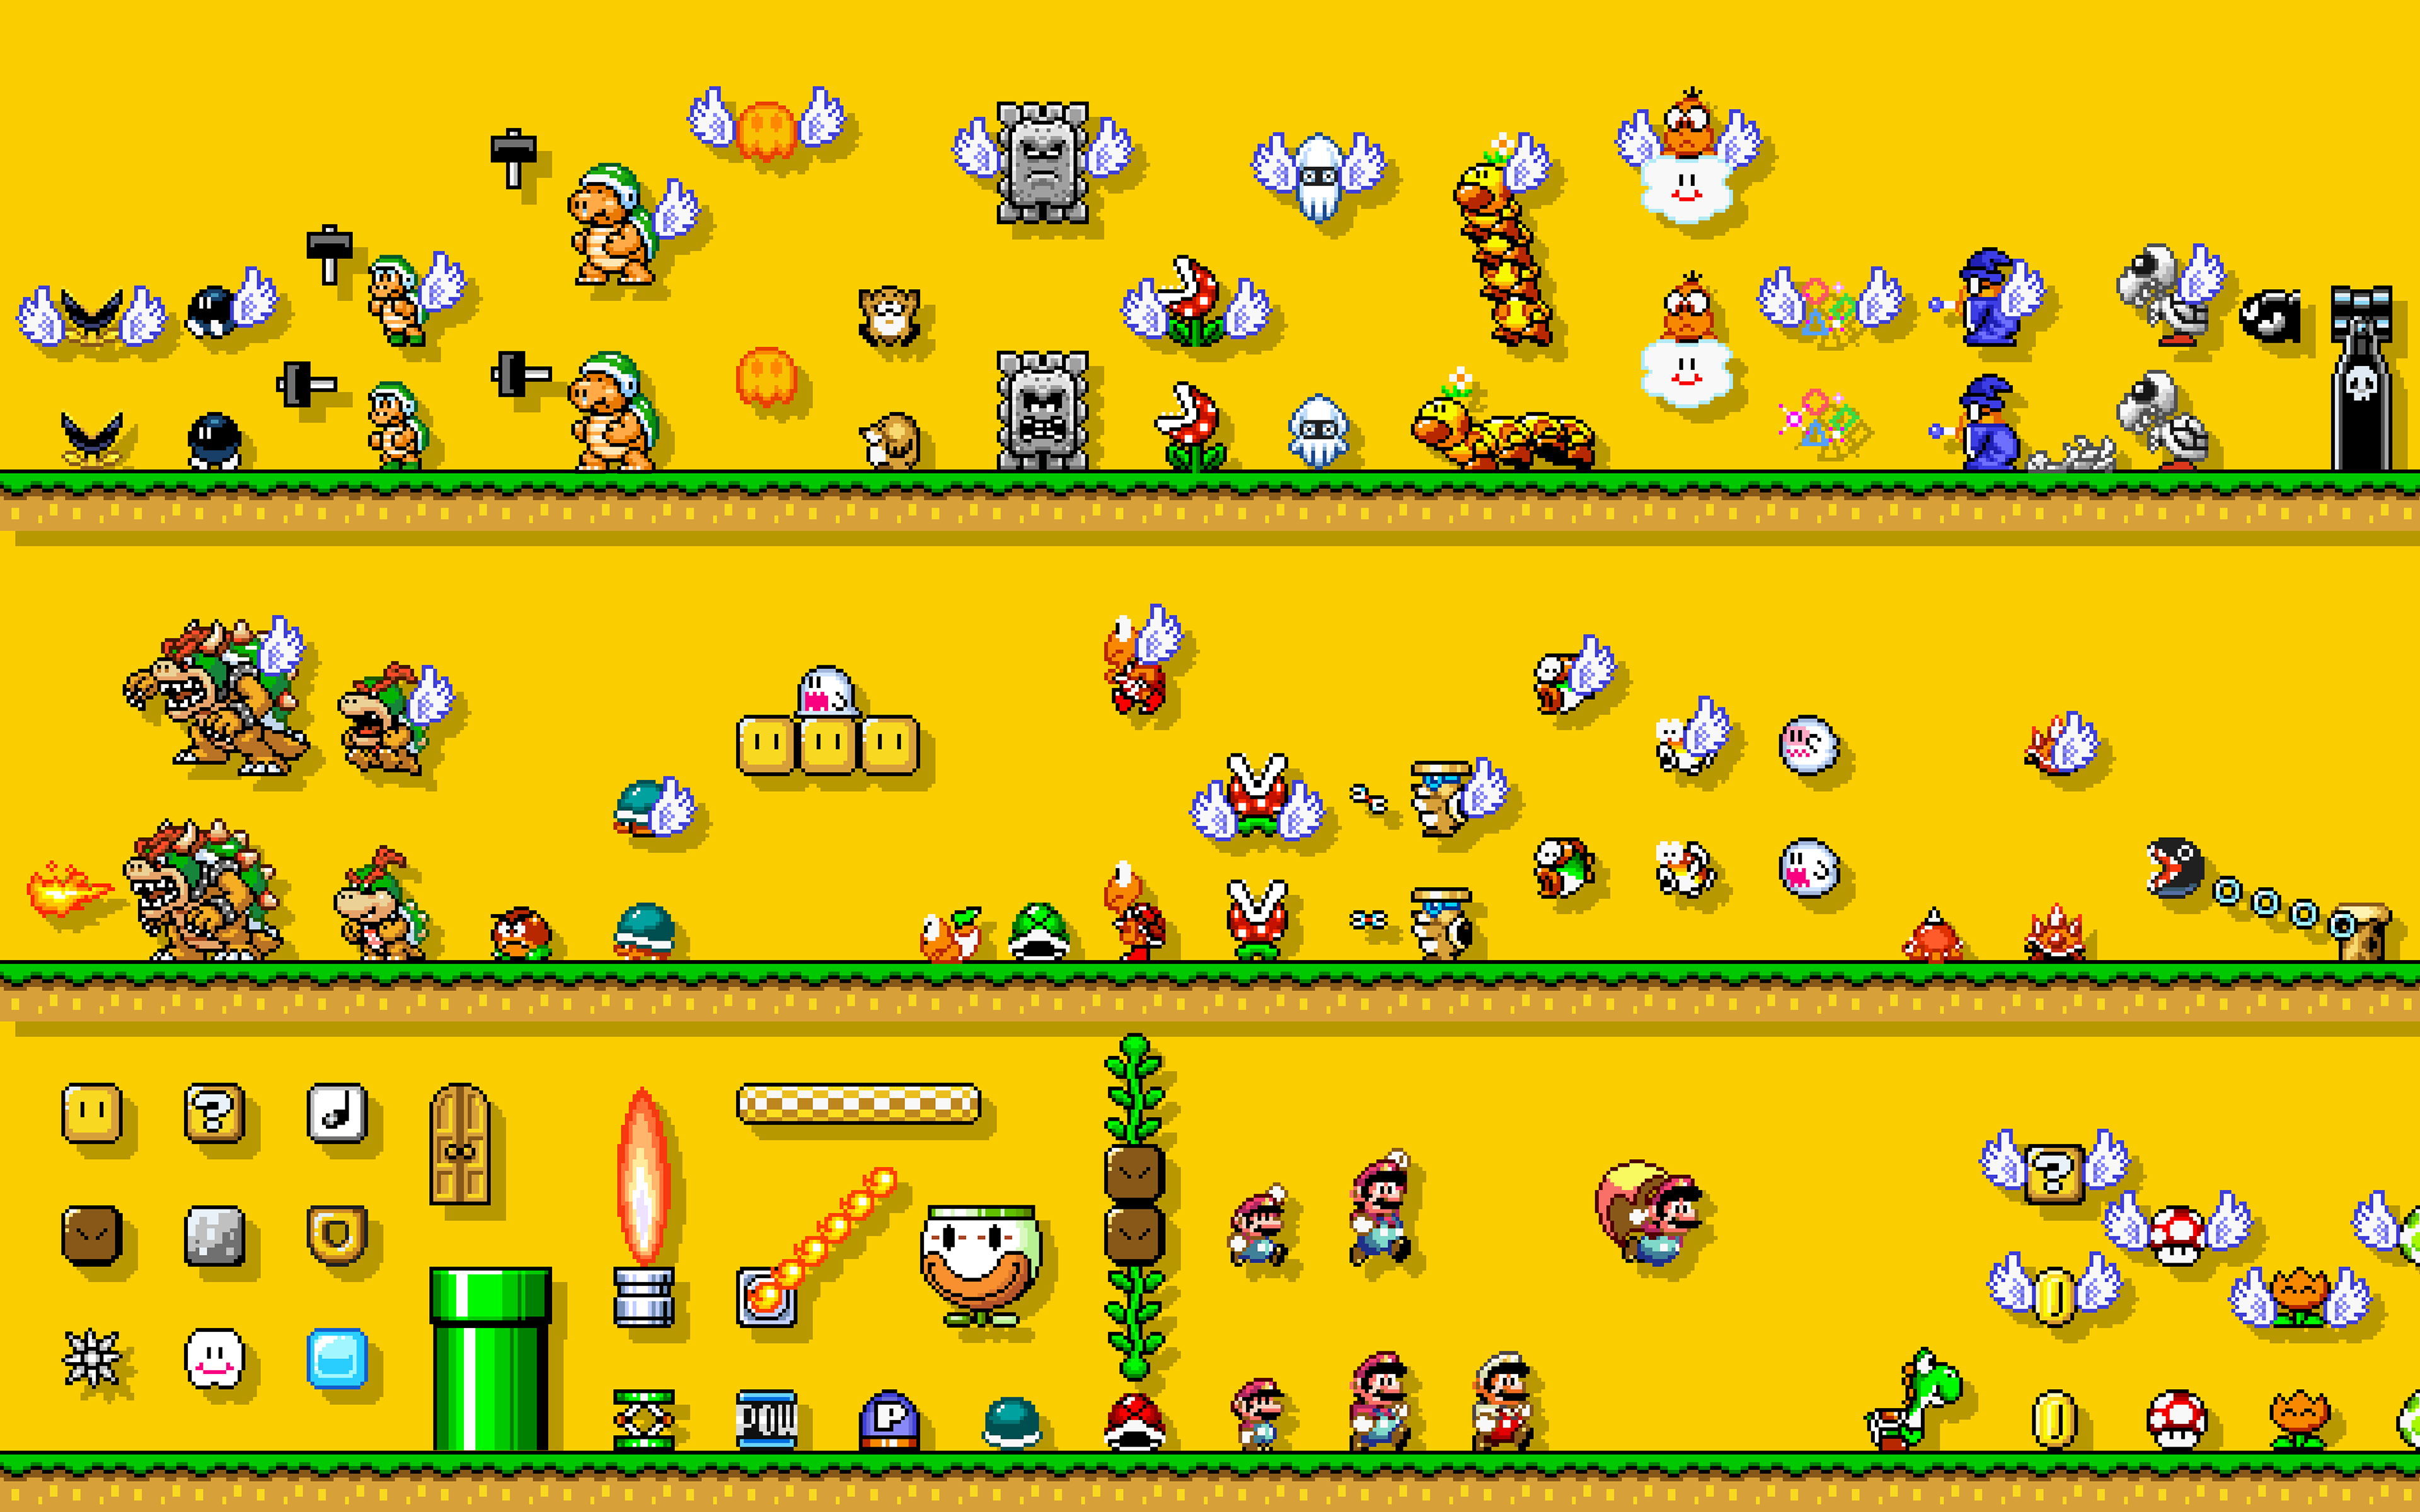 #video games, #Super Mario Bros., #retro games, #simple